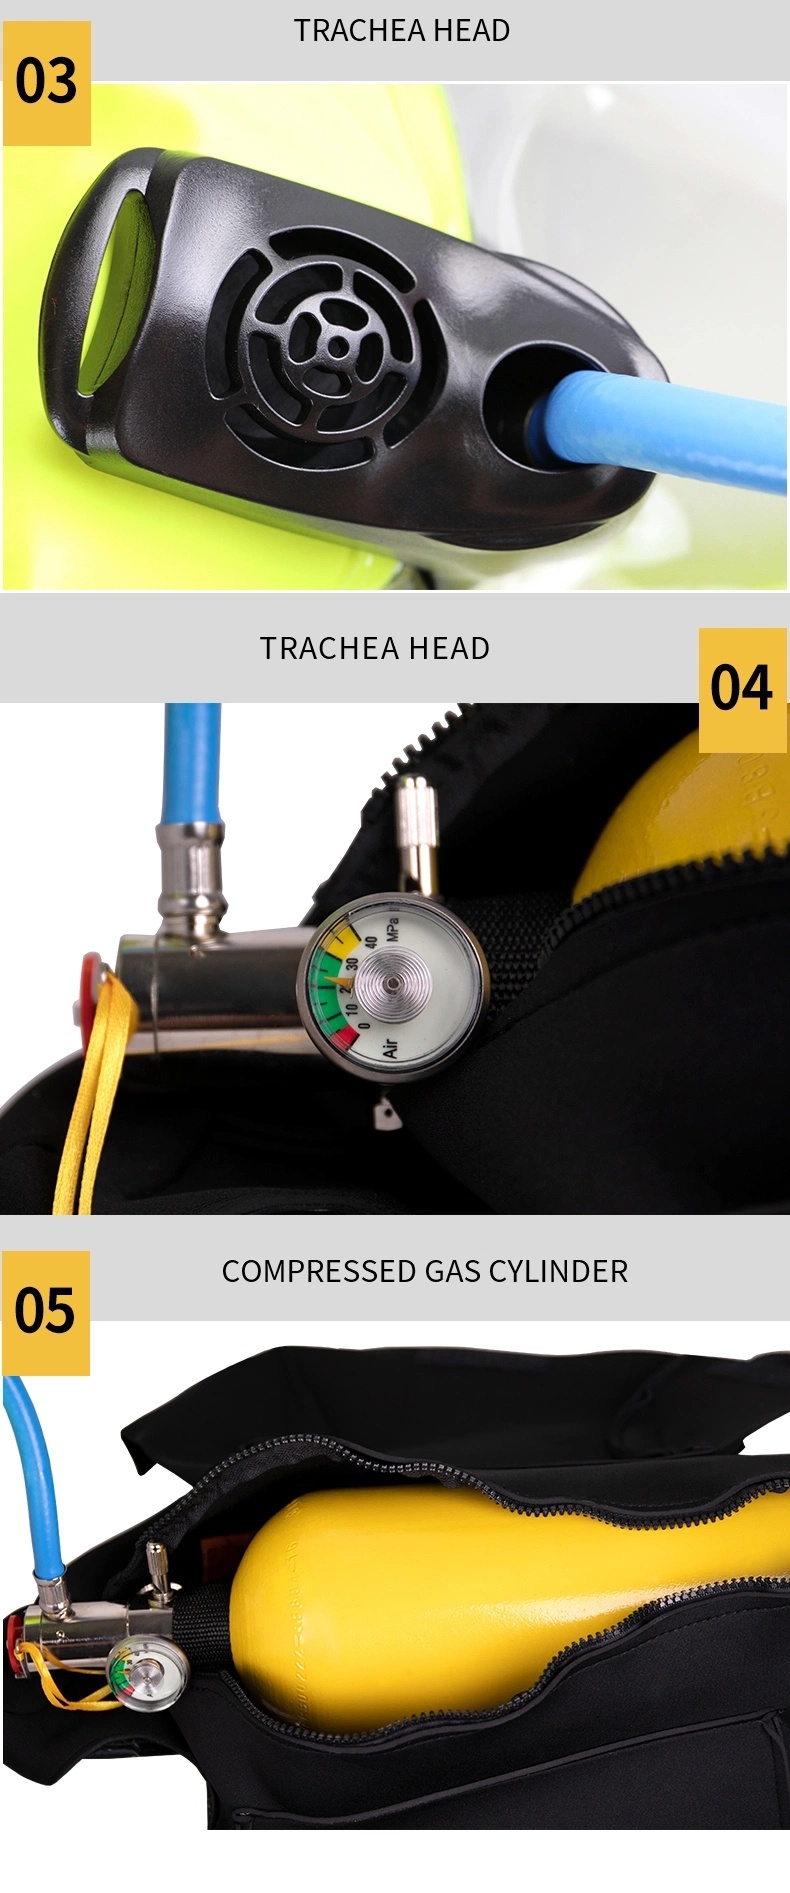 15 Min Steel Cylinder Emergency Escape Breathing Apparatus Device